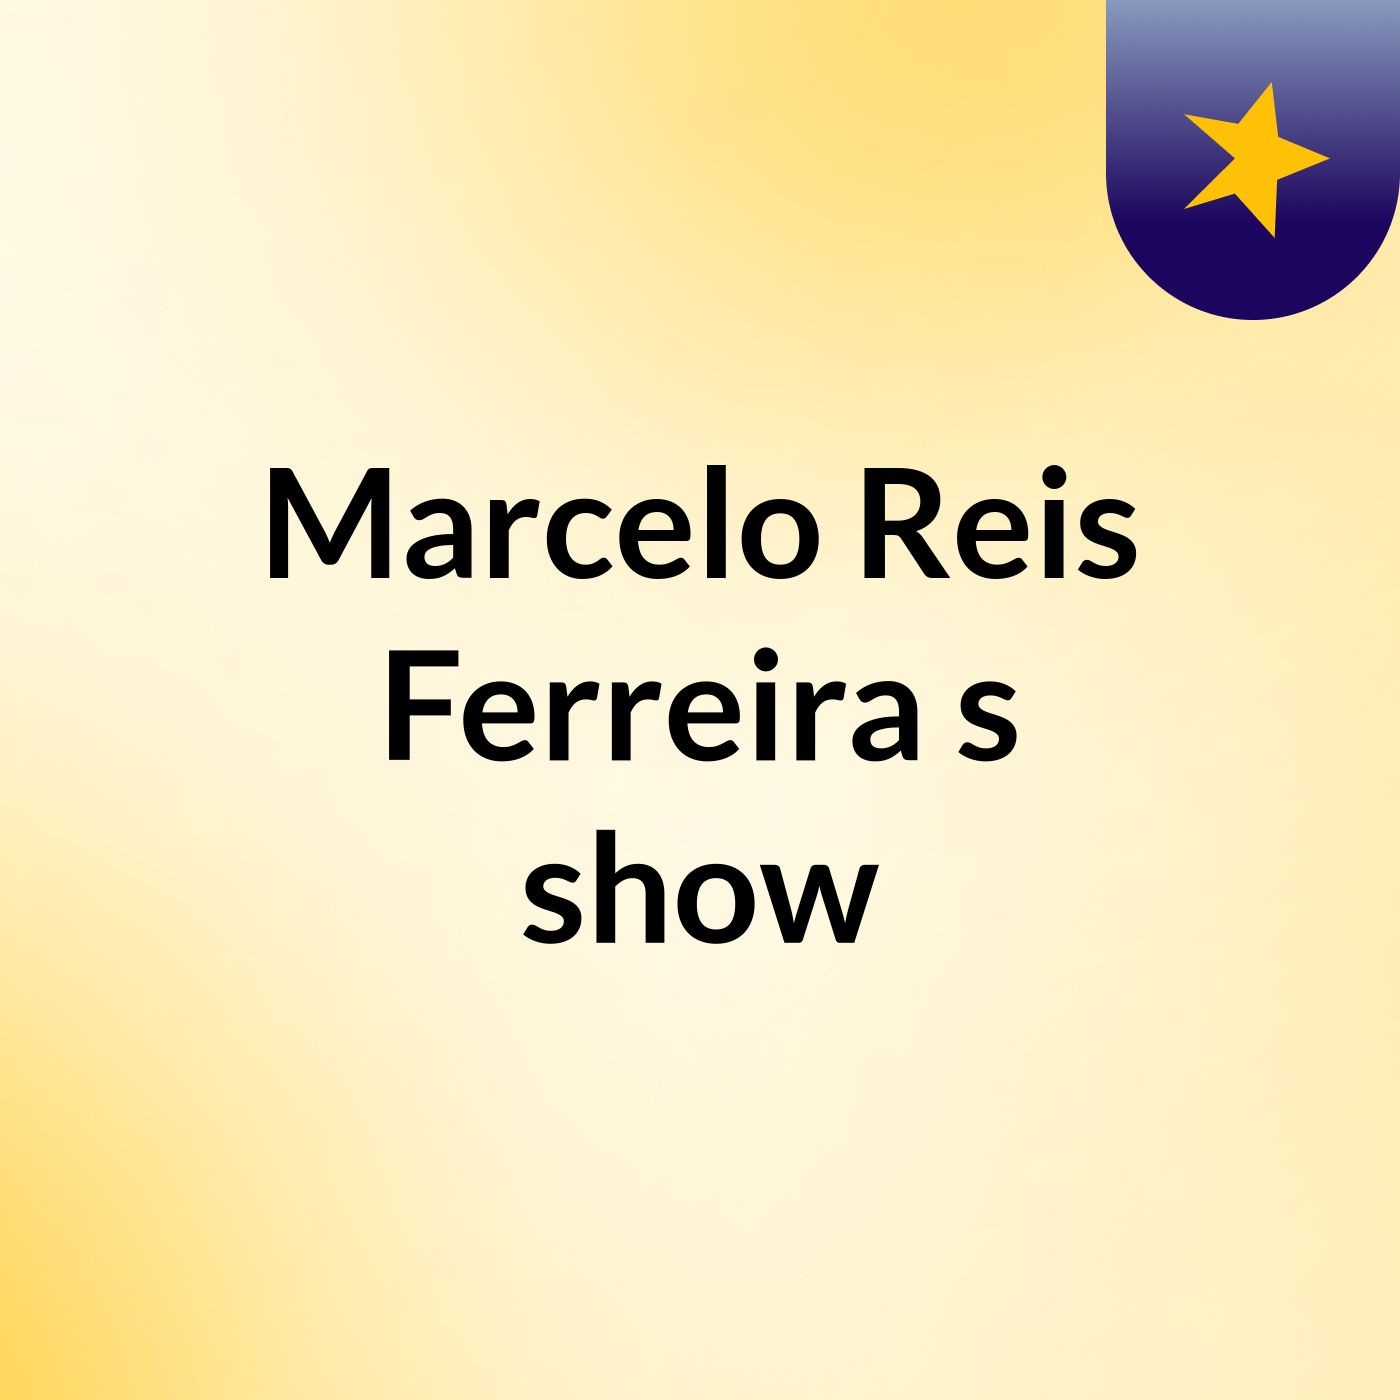 Marcelo Reis Ferreira's show